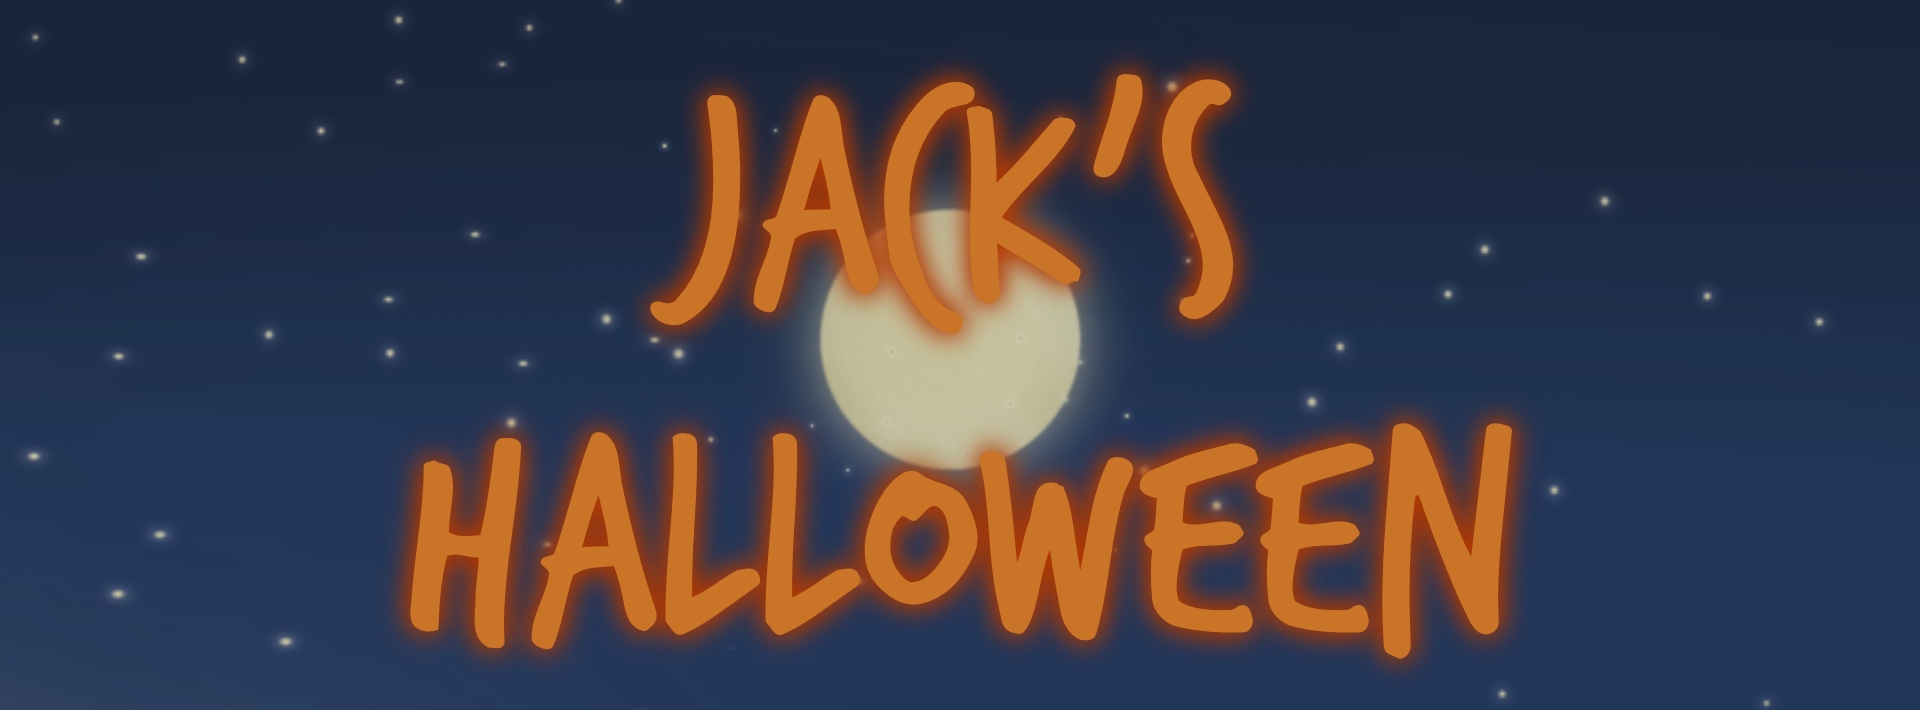 Jack's Halloween